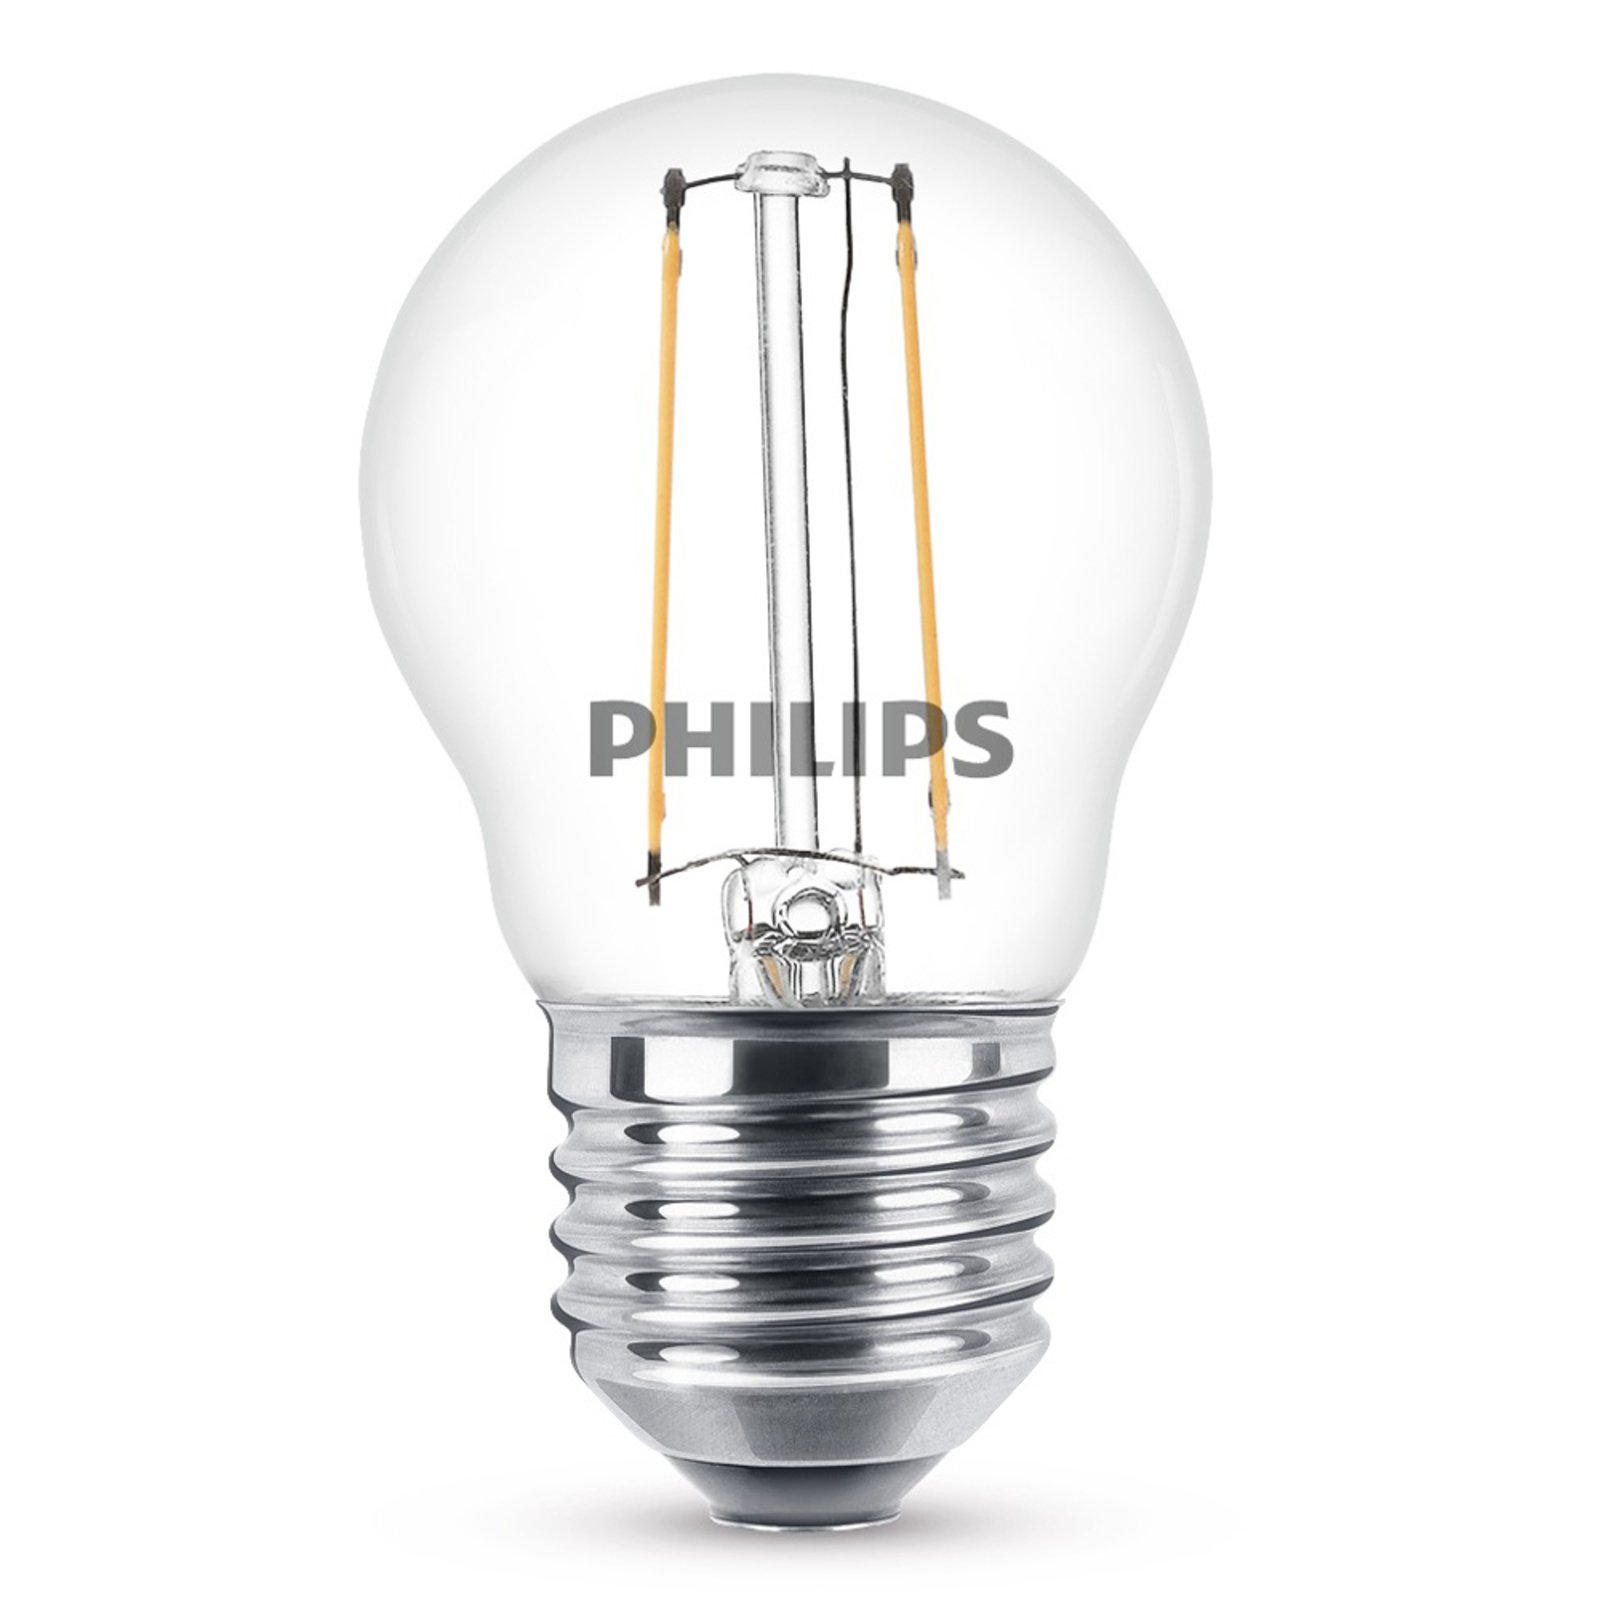 Philips E27 2W 827 bec LED